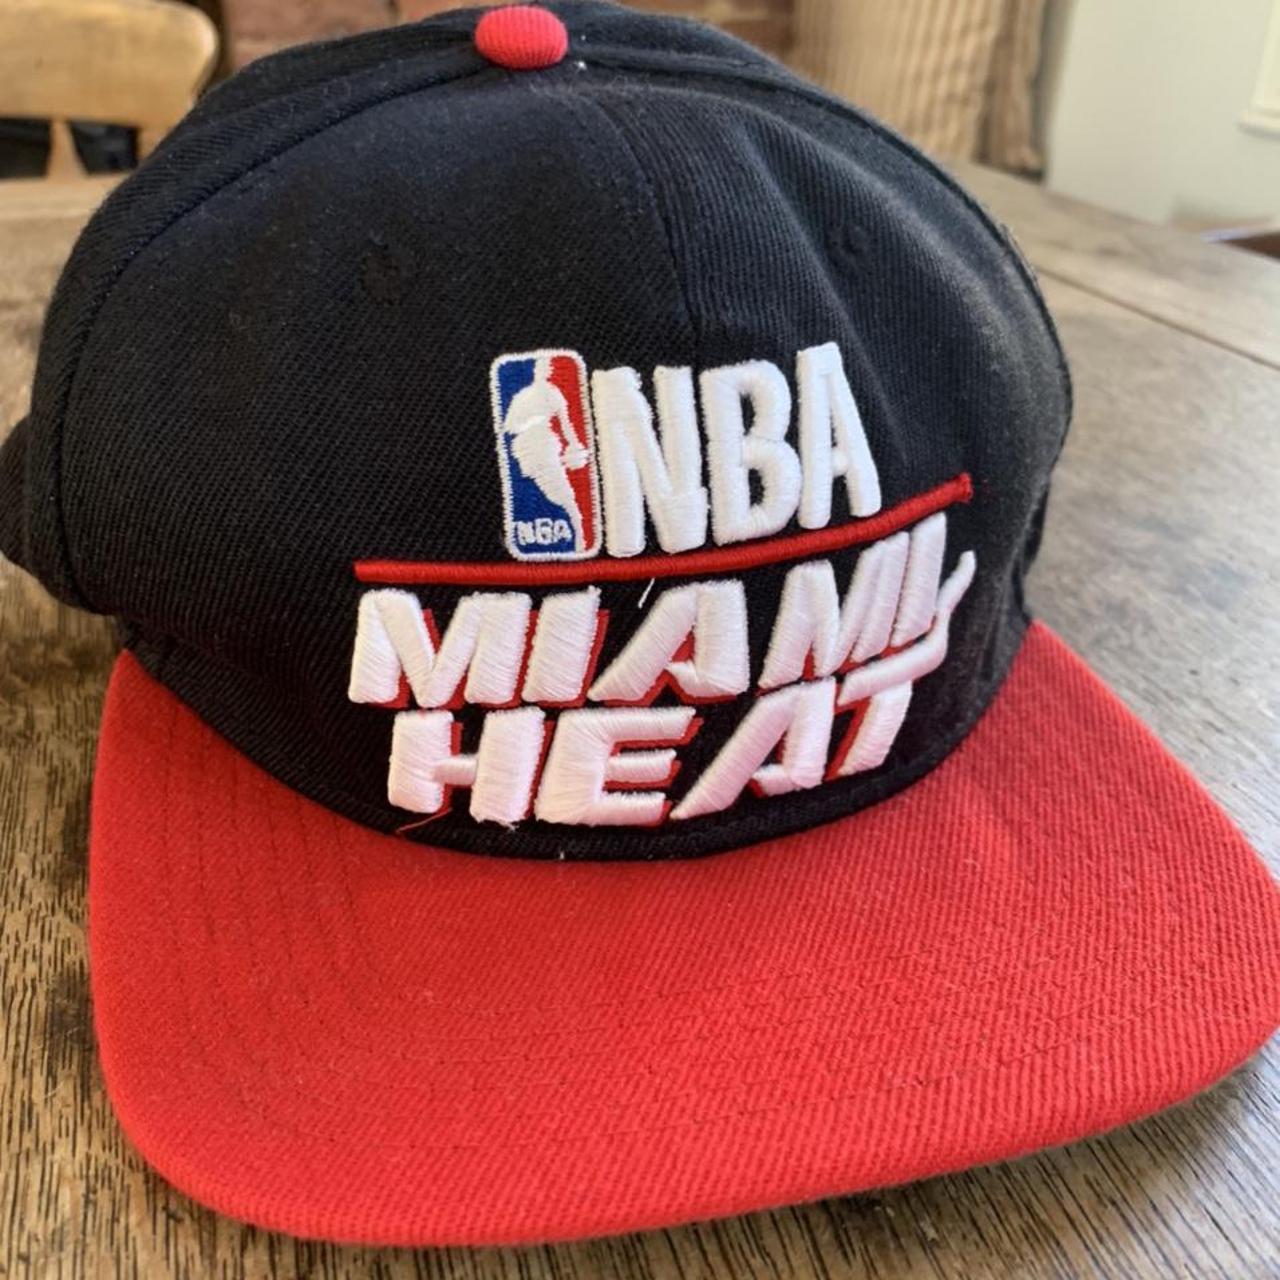 Product Image 1 - Miami Heat NBA cap

❤️‍🔥

#nba
#miamiheat
#mitchell&ness
#vintage